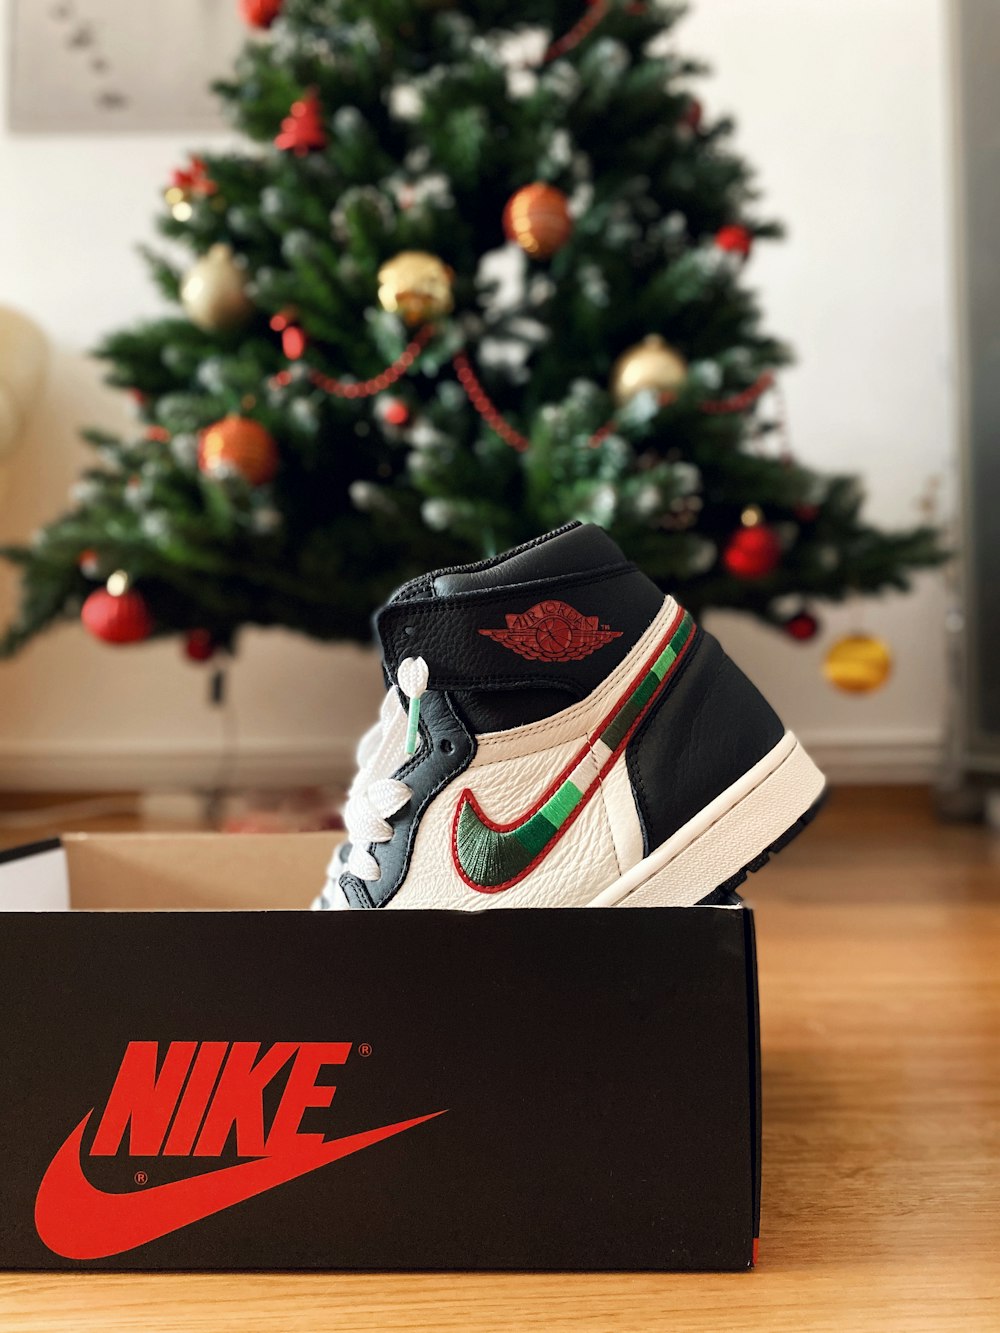 Nike high-top shoe in box near Christmas tree photo – Free Tree Image on  Unsplash